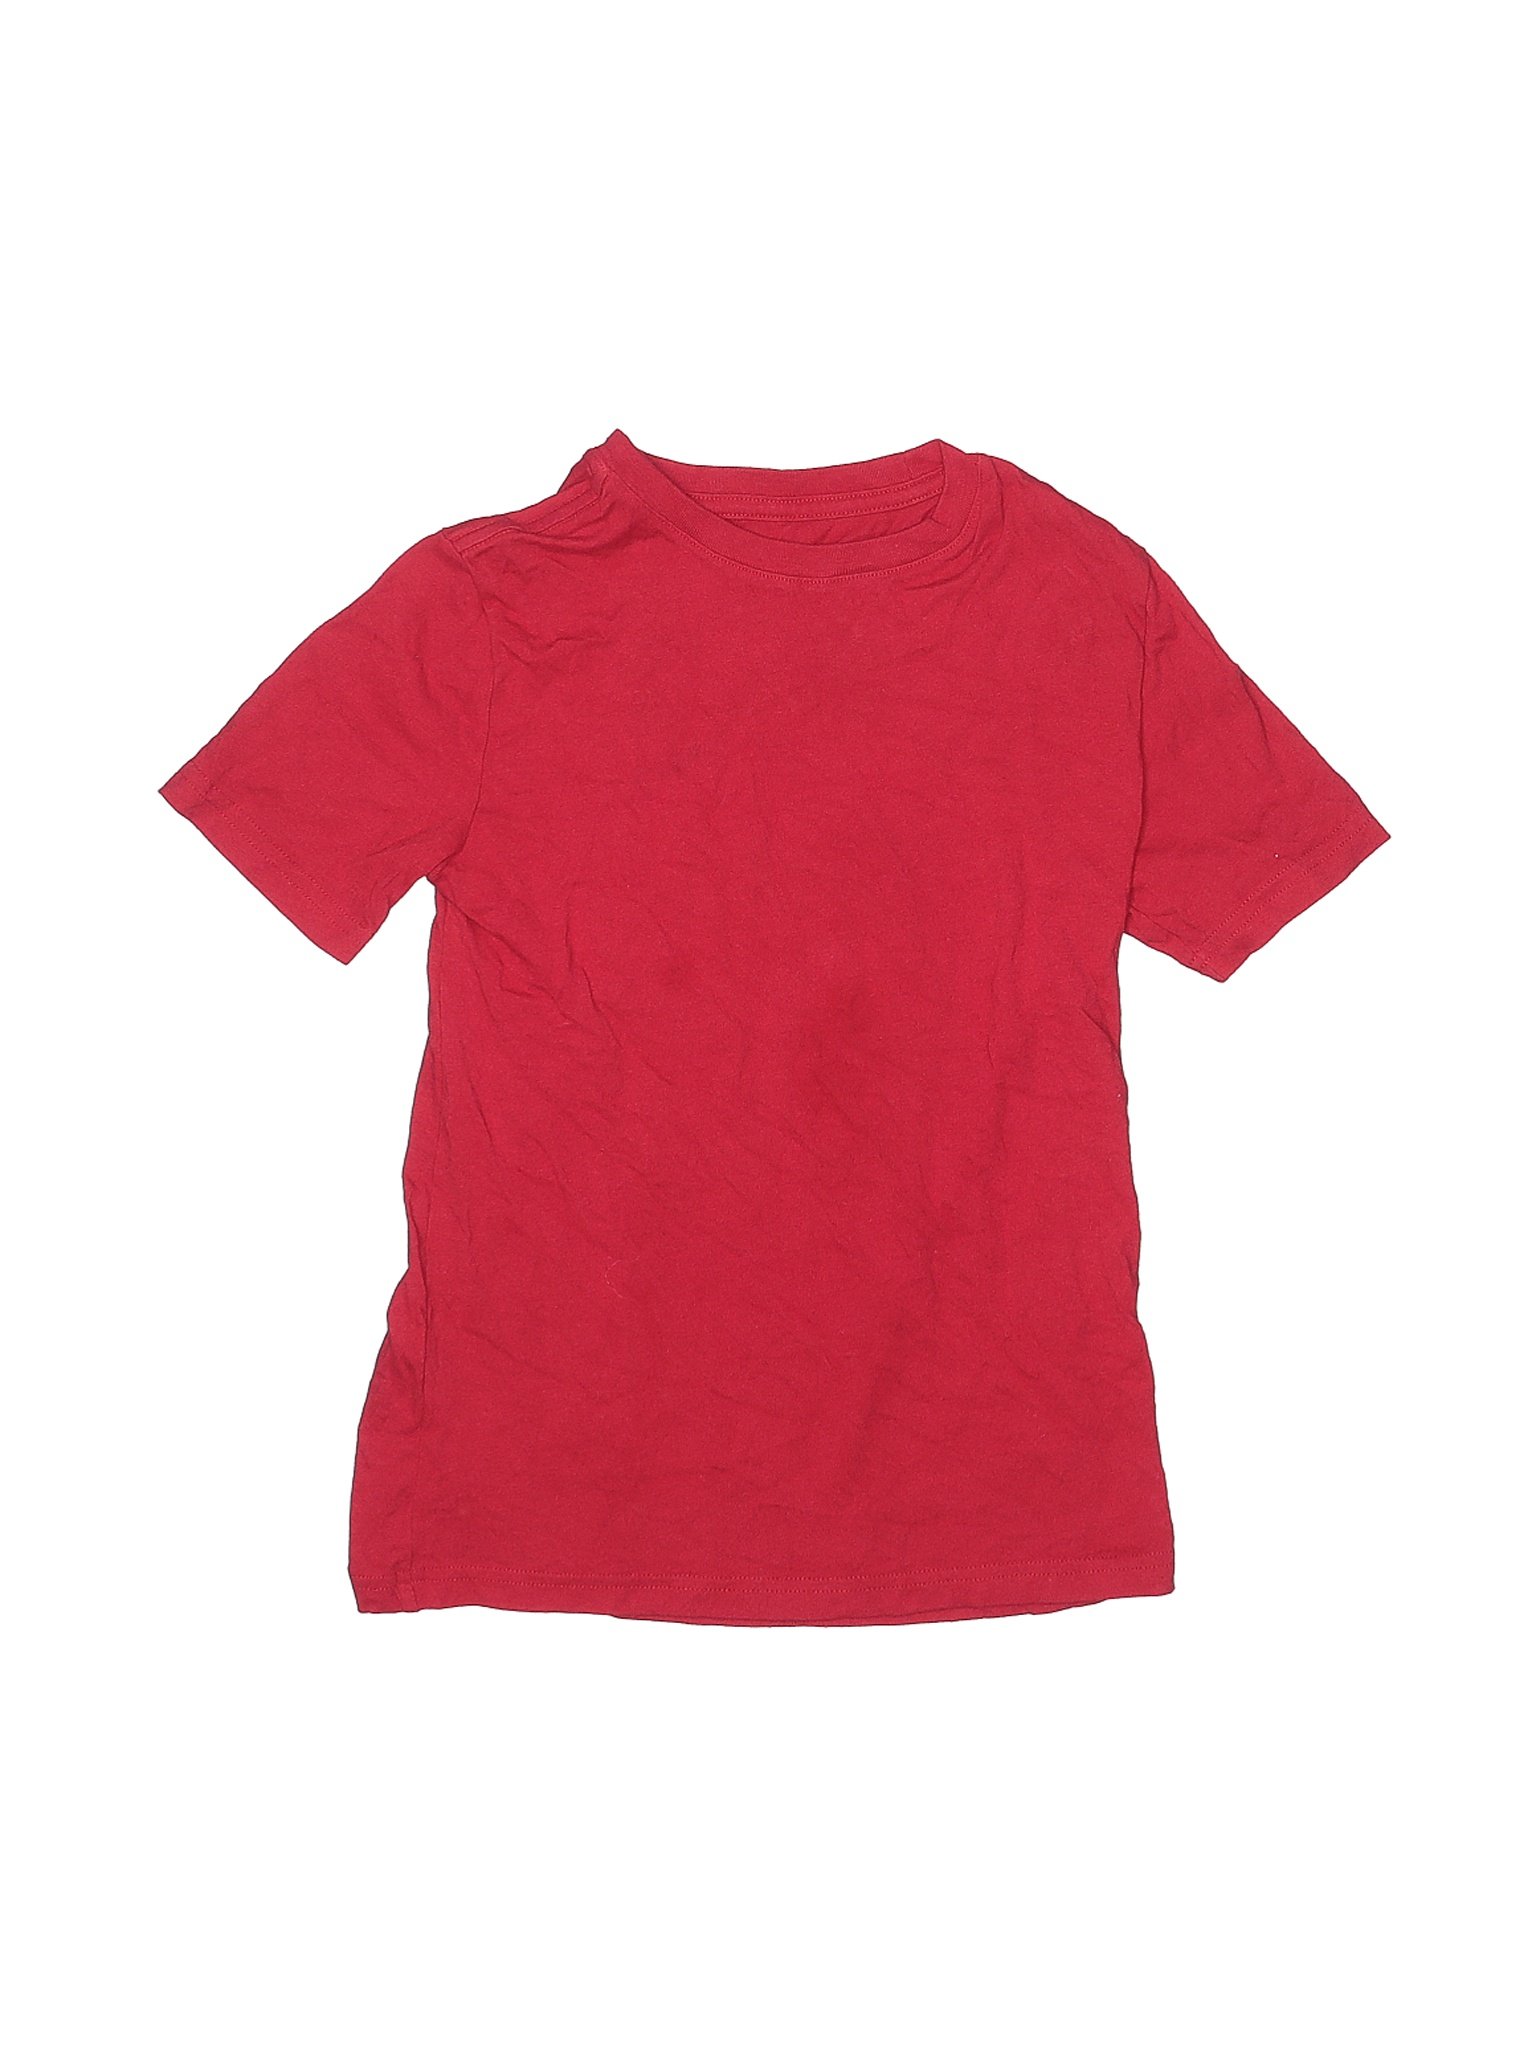 Wonder Nation Boys Red Short Sleeve T-Shirt 8 | eBay